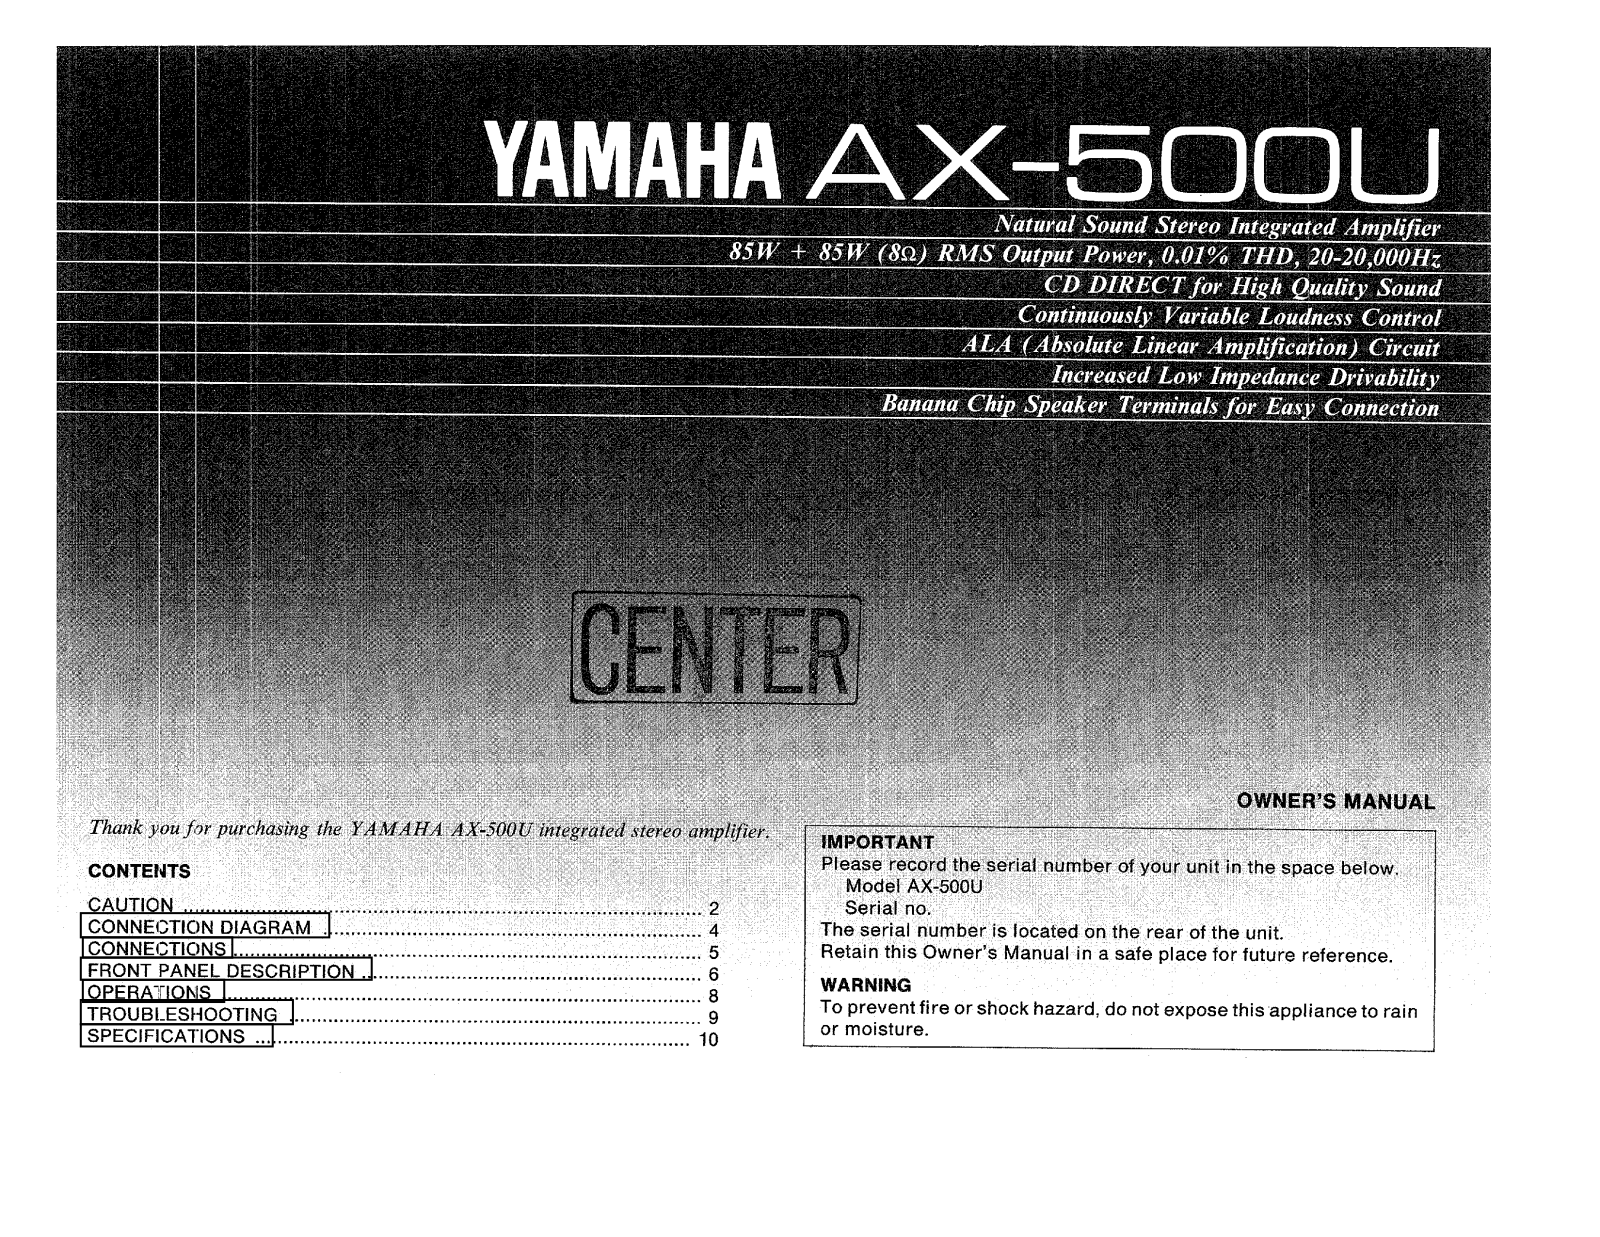 Yamaha AX-500U Owner Manual